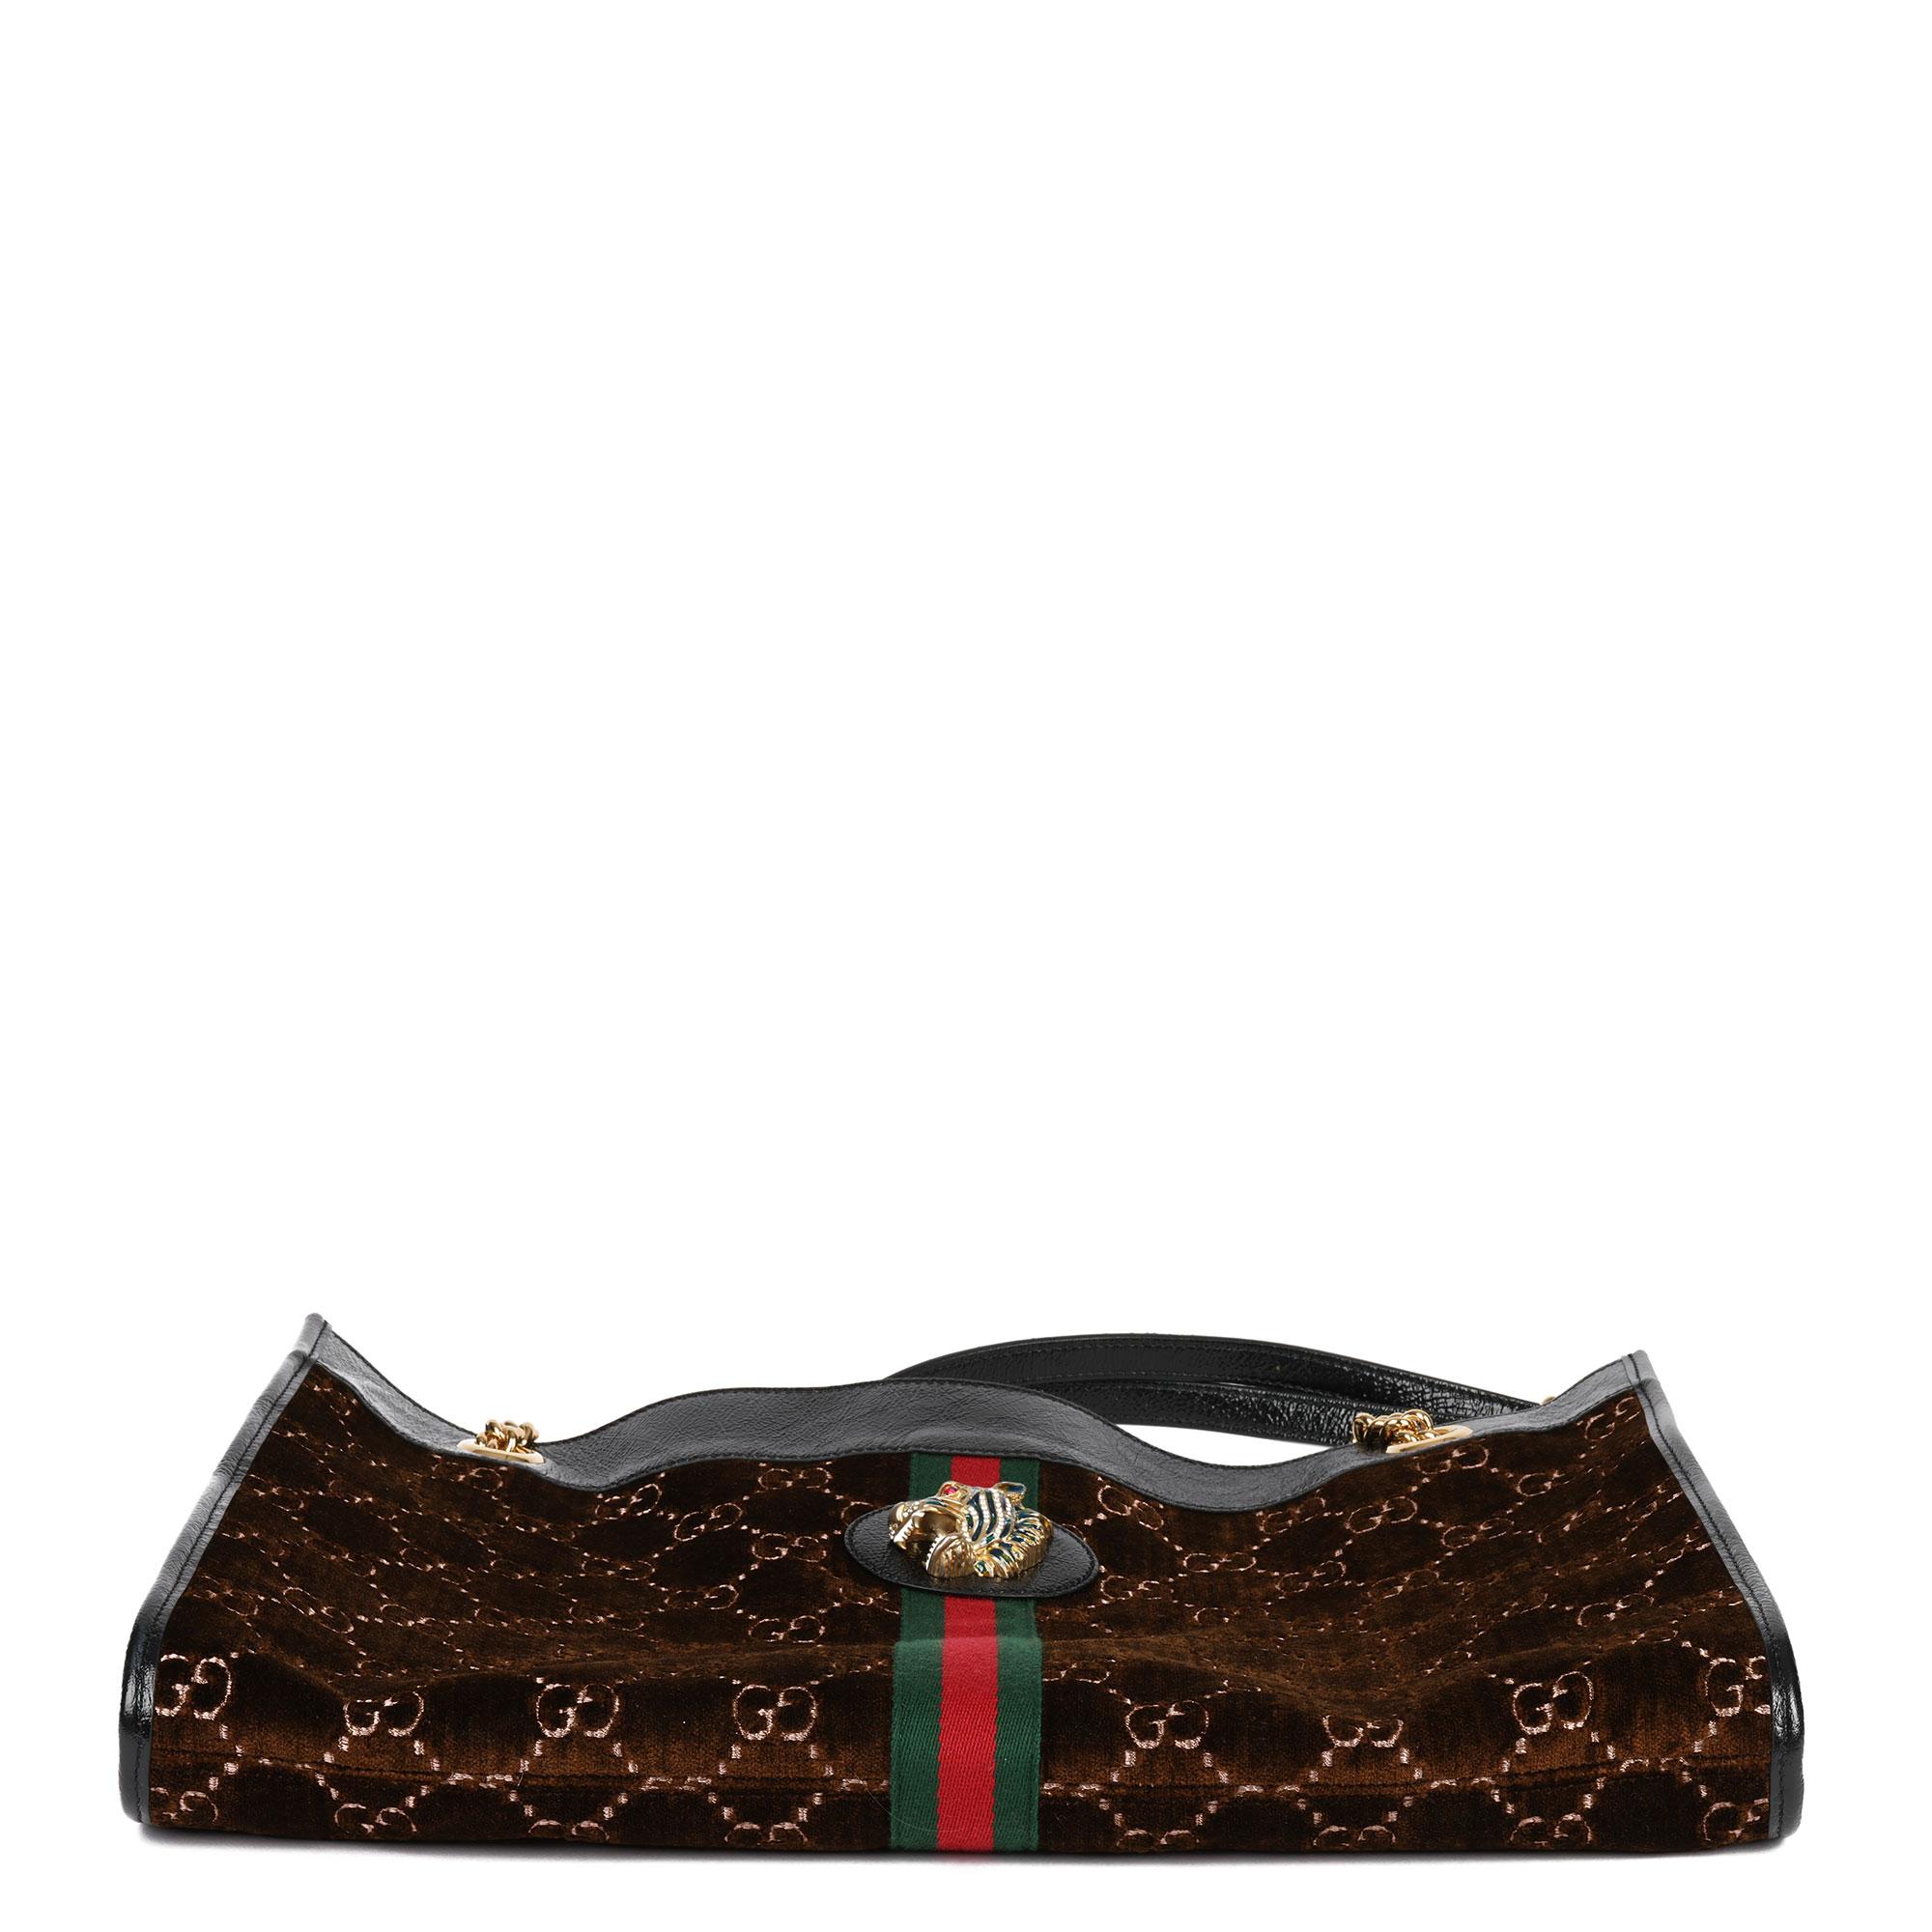 Gucci Brown GG Velvet & Black Patent Leather Large Rajah Tote Bag 1